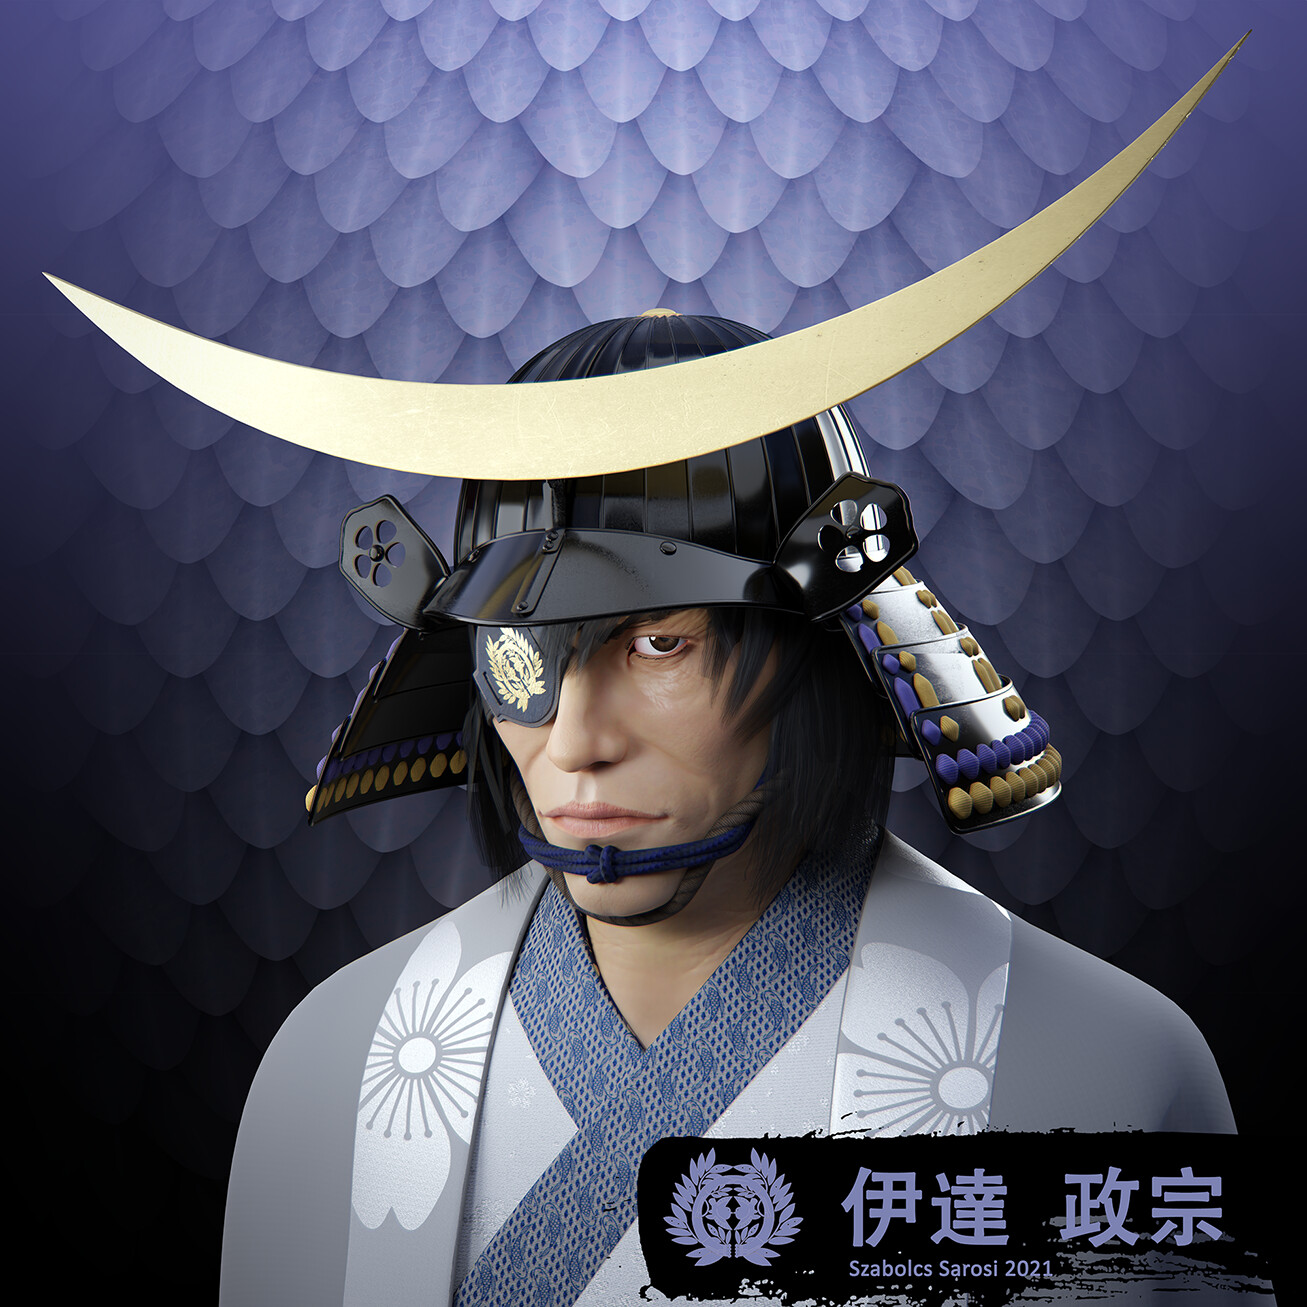 Date Masamune, Wikia Liber Proeliis